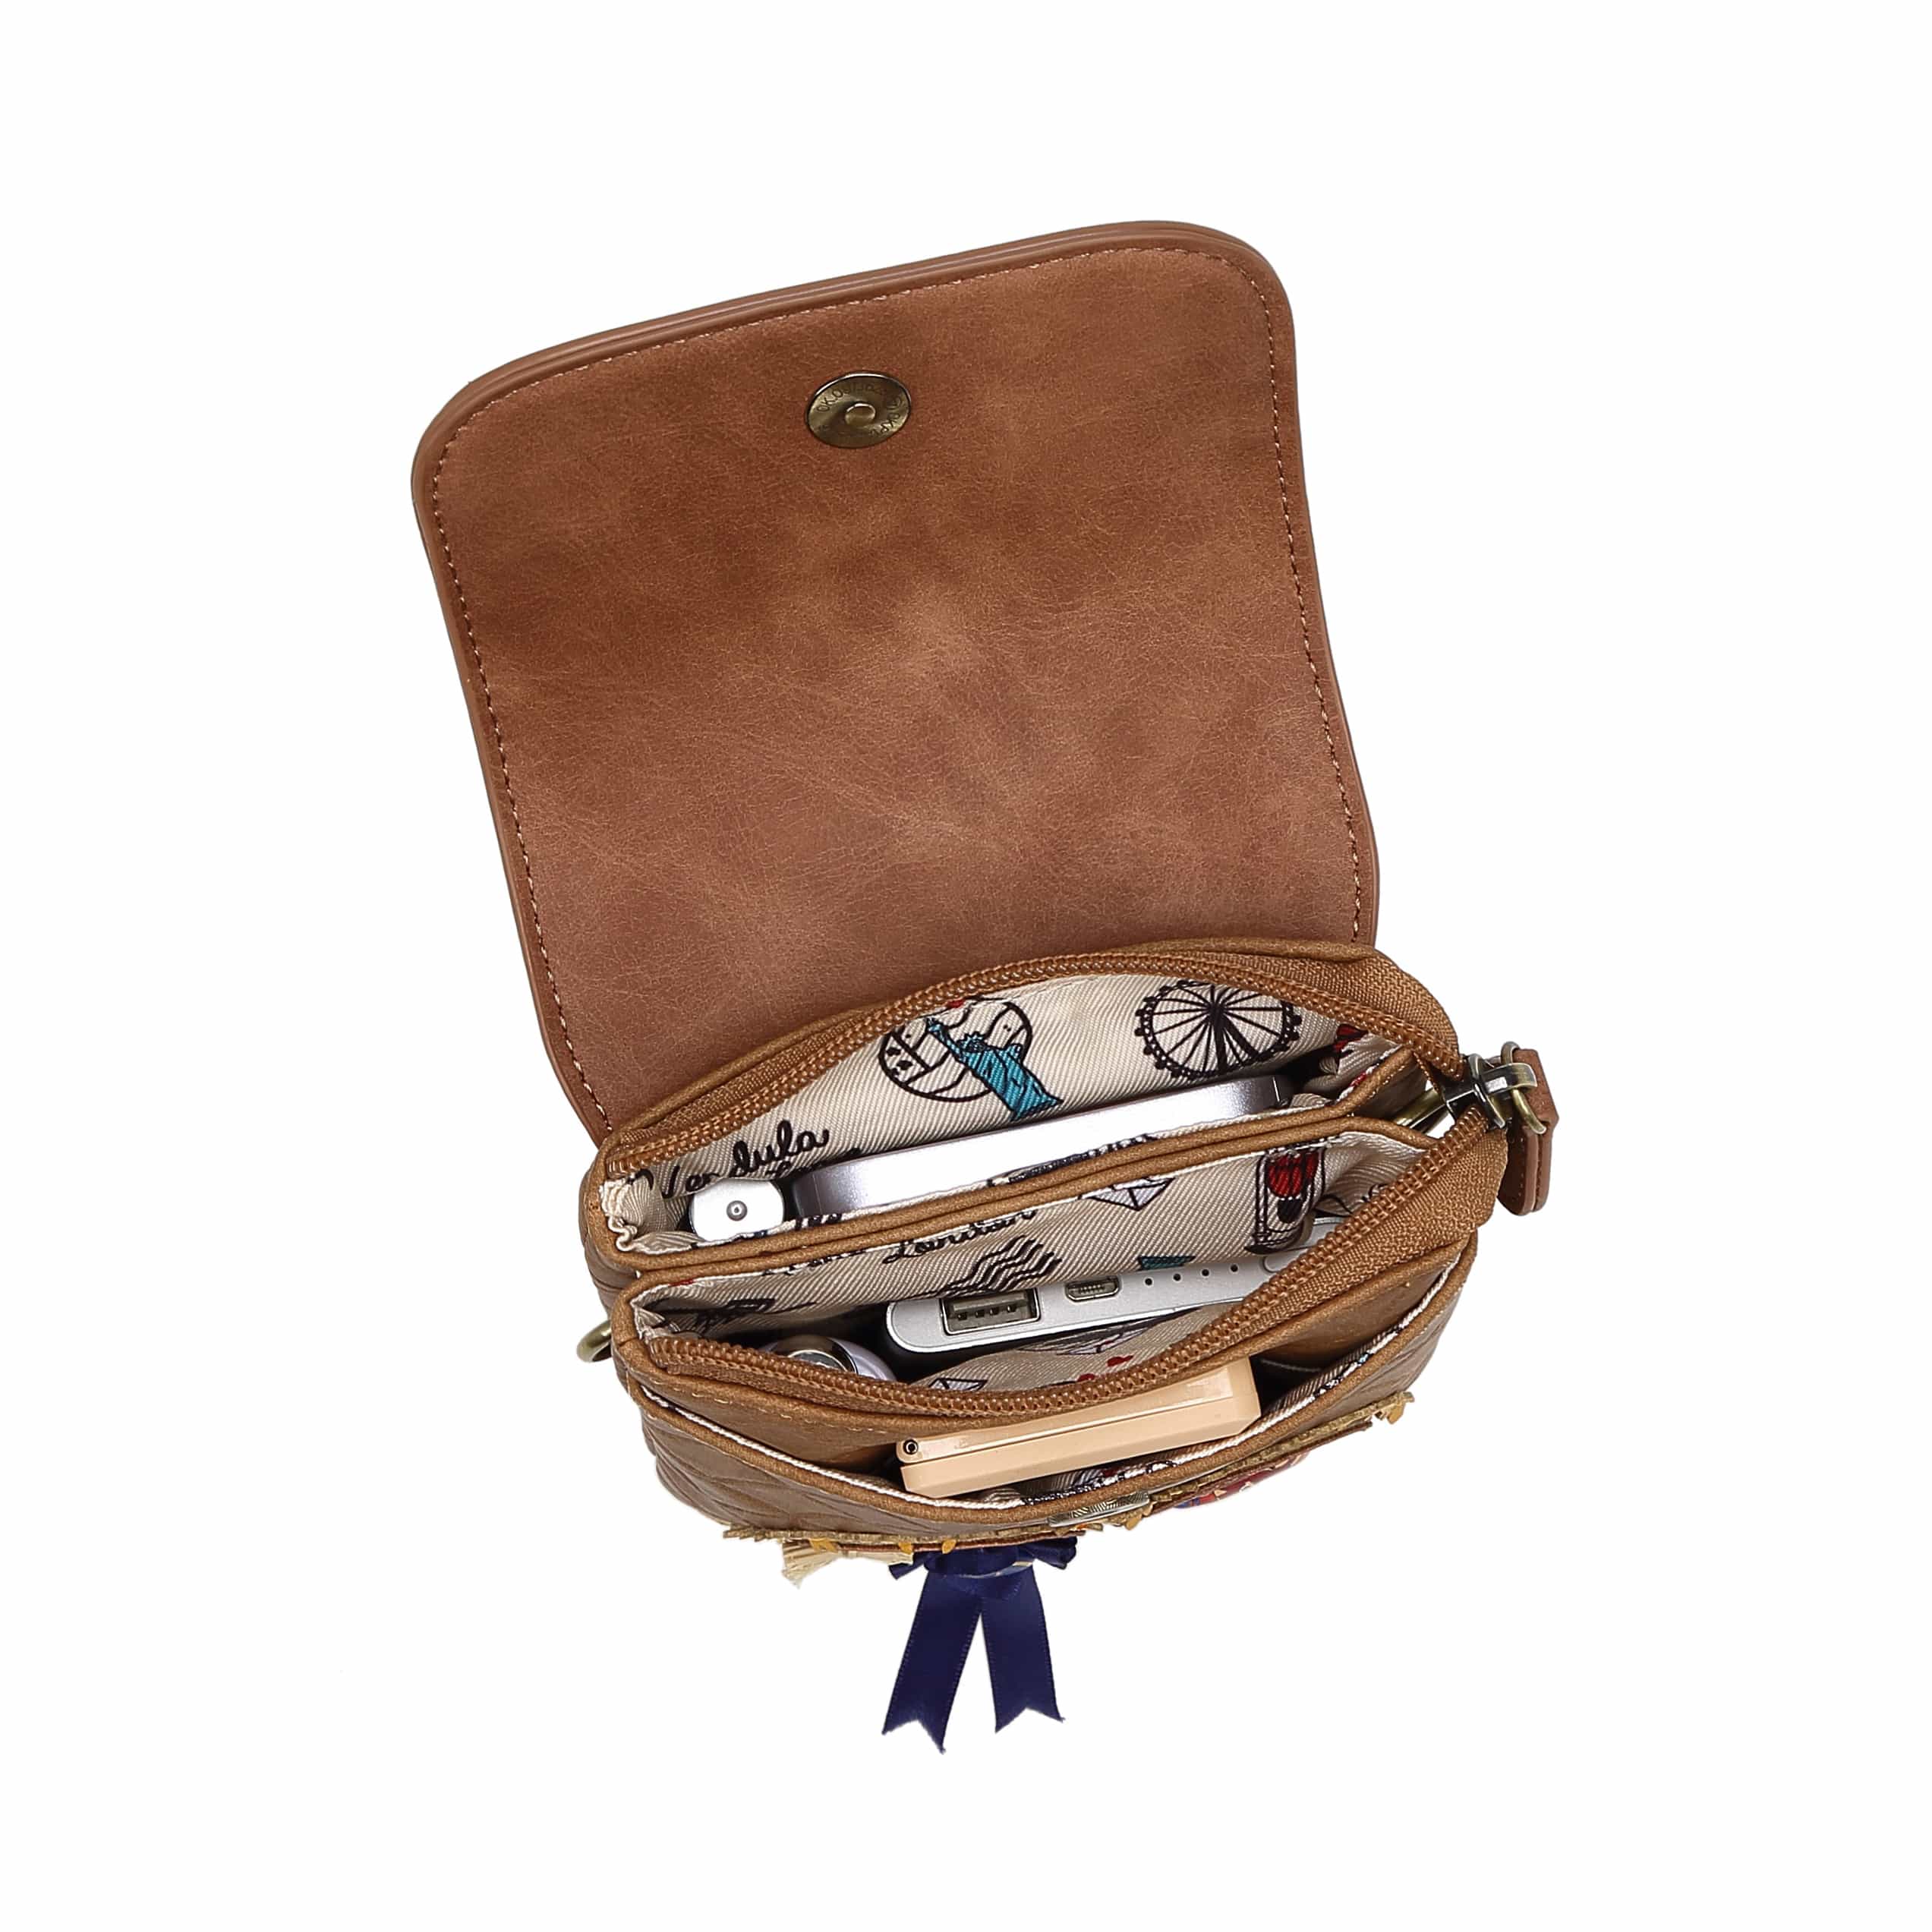 Banned Polka Starr Handbag Retro Bag 1950's Rockabilly Faux Leather Top  Handle | eBay